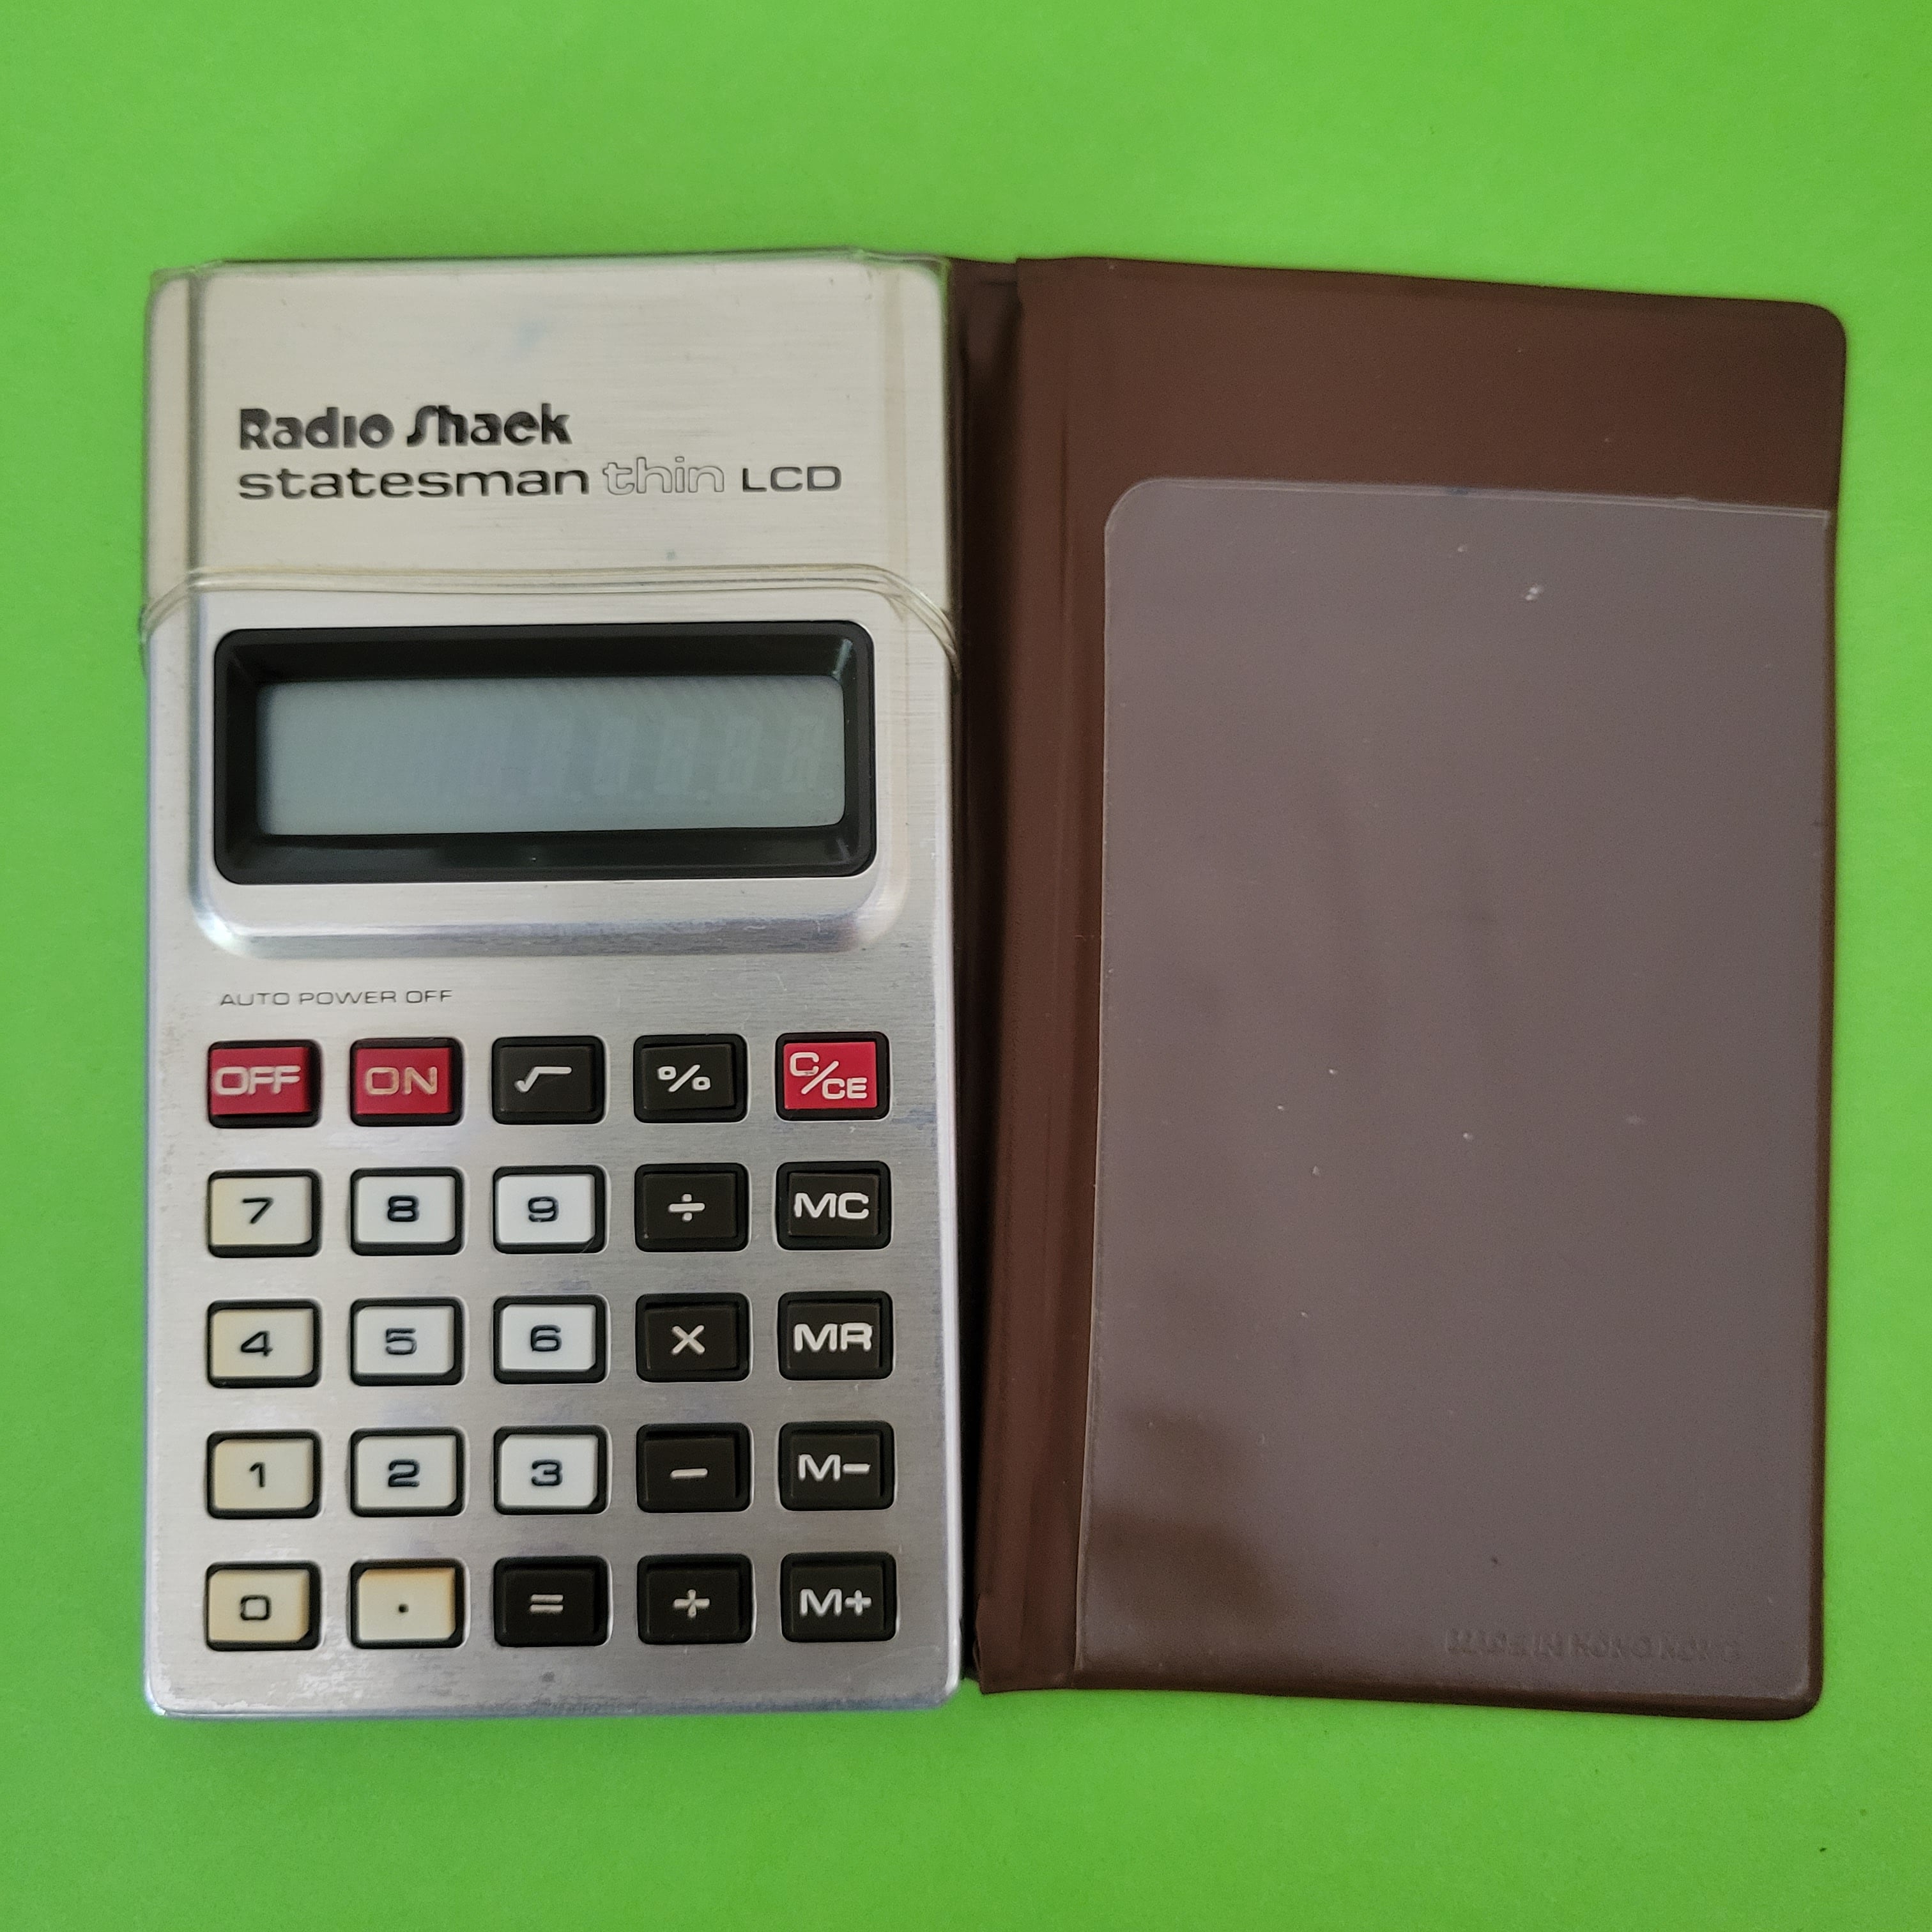 an image of a Radio Shack Statesman thin LCD Four Function + calculator